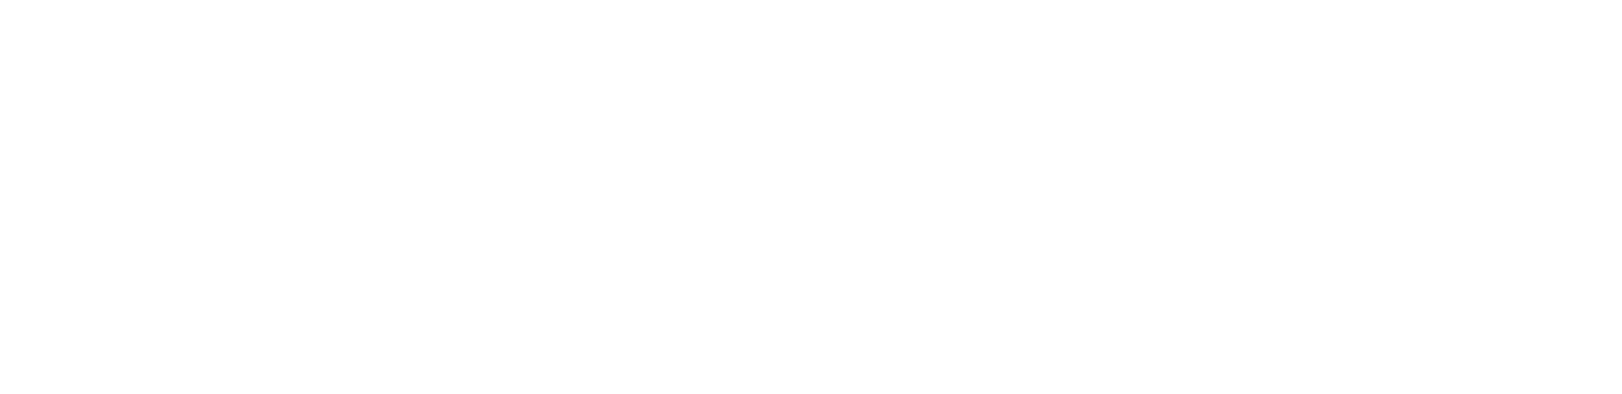 Taboola.com Logo groß für dunkle Hintergründe (transparentes PNG)